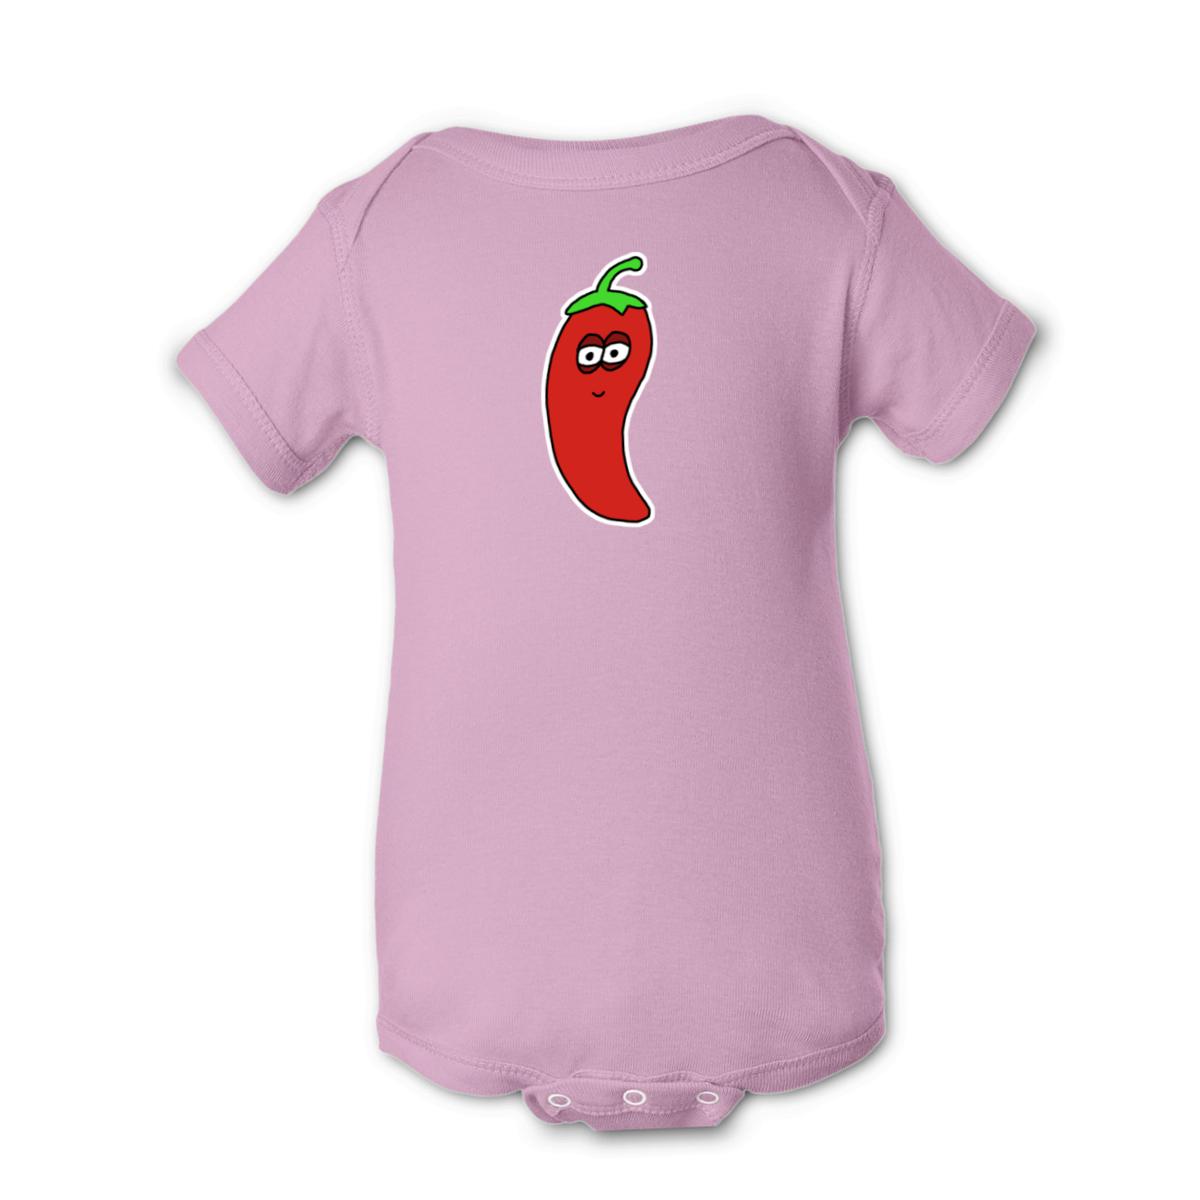 Chili Pepper Onesie 24M pink